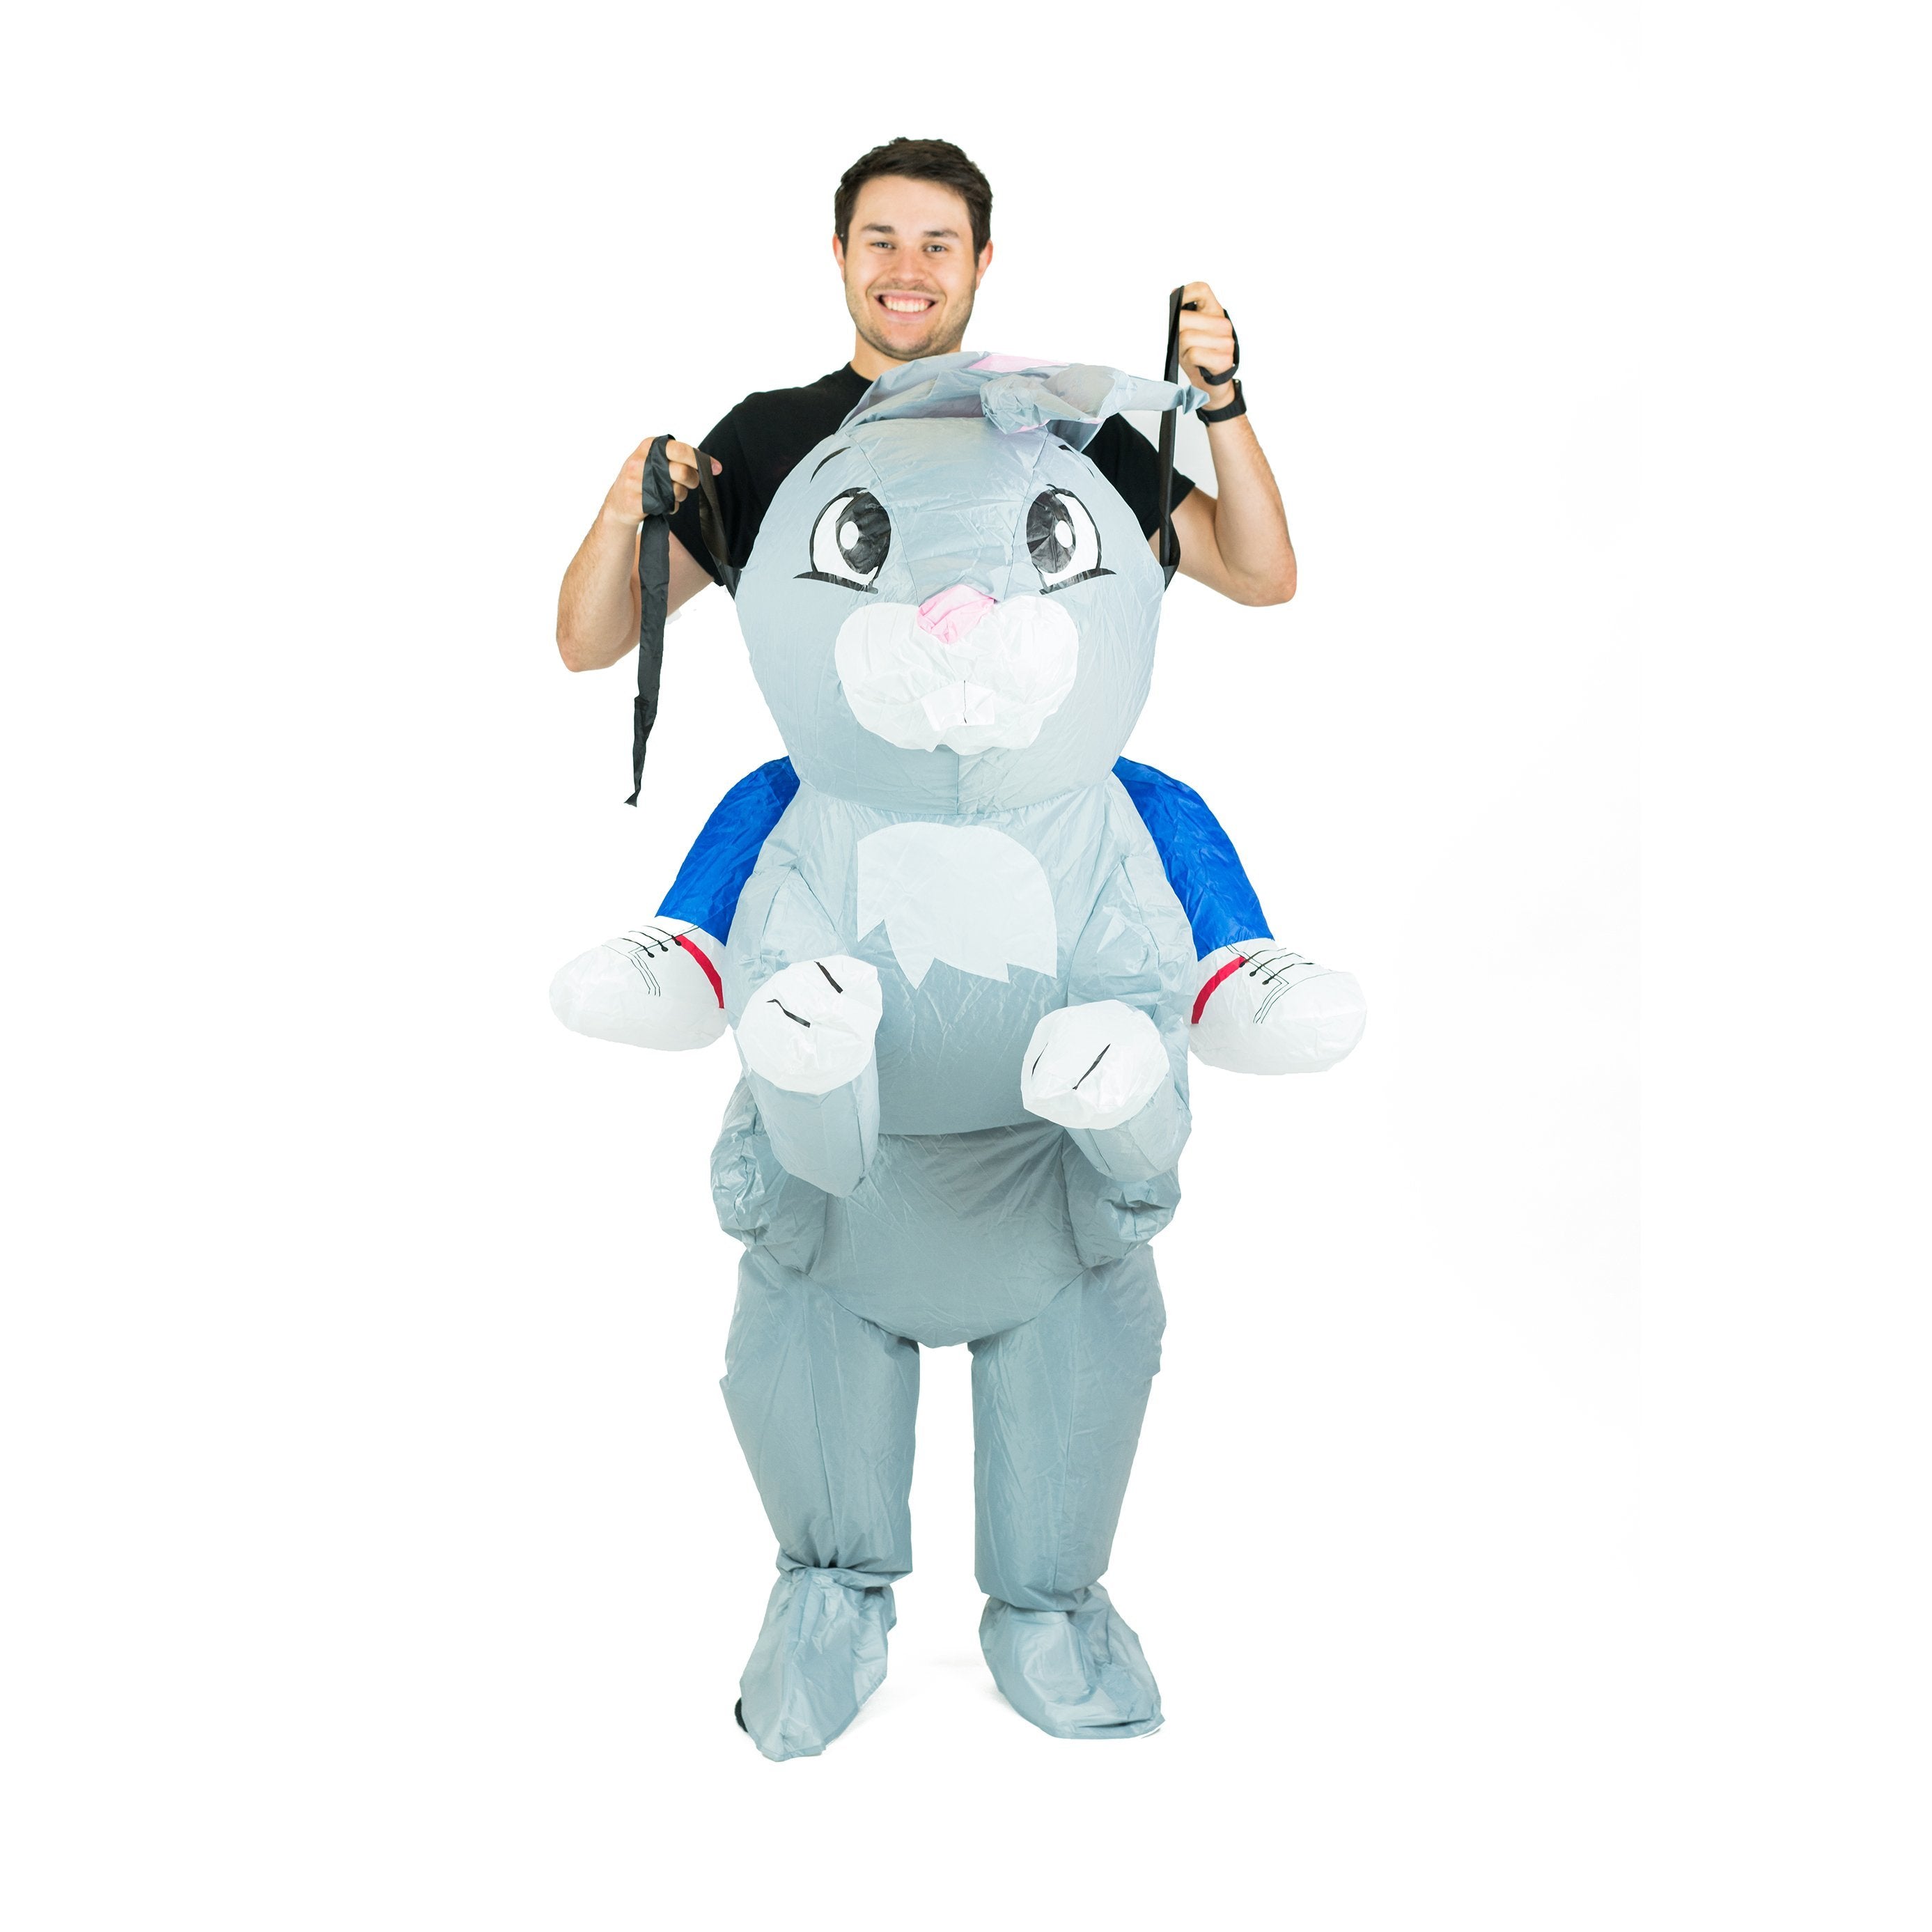 Bodysocks - Inflatable Rabbit Costume